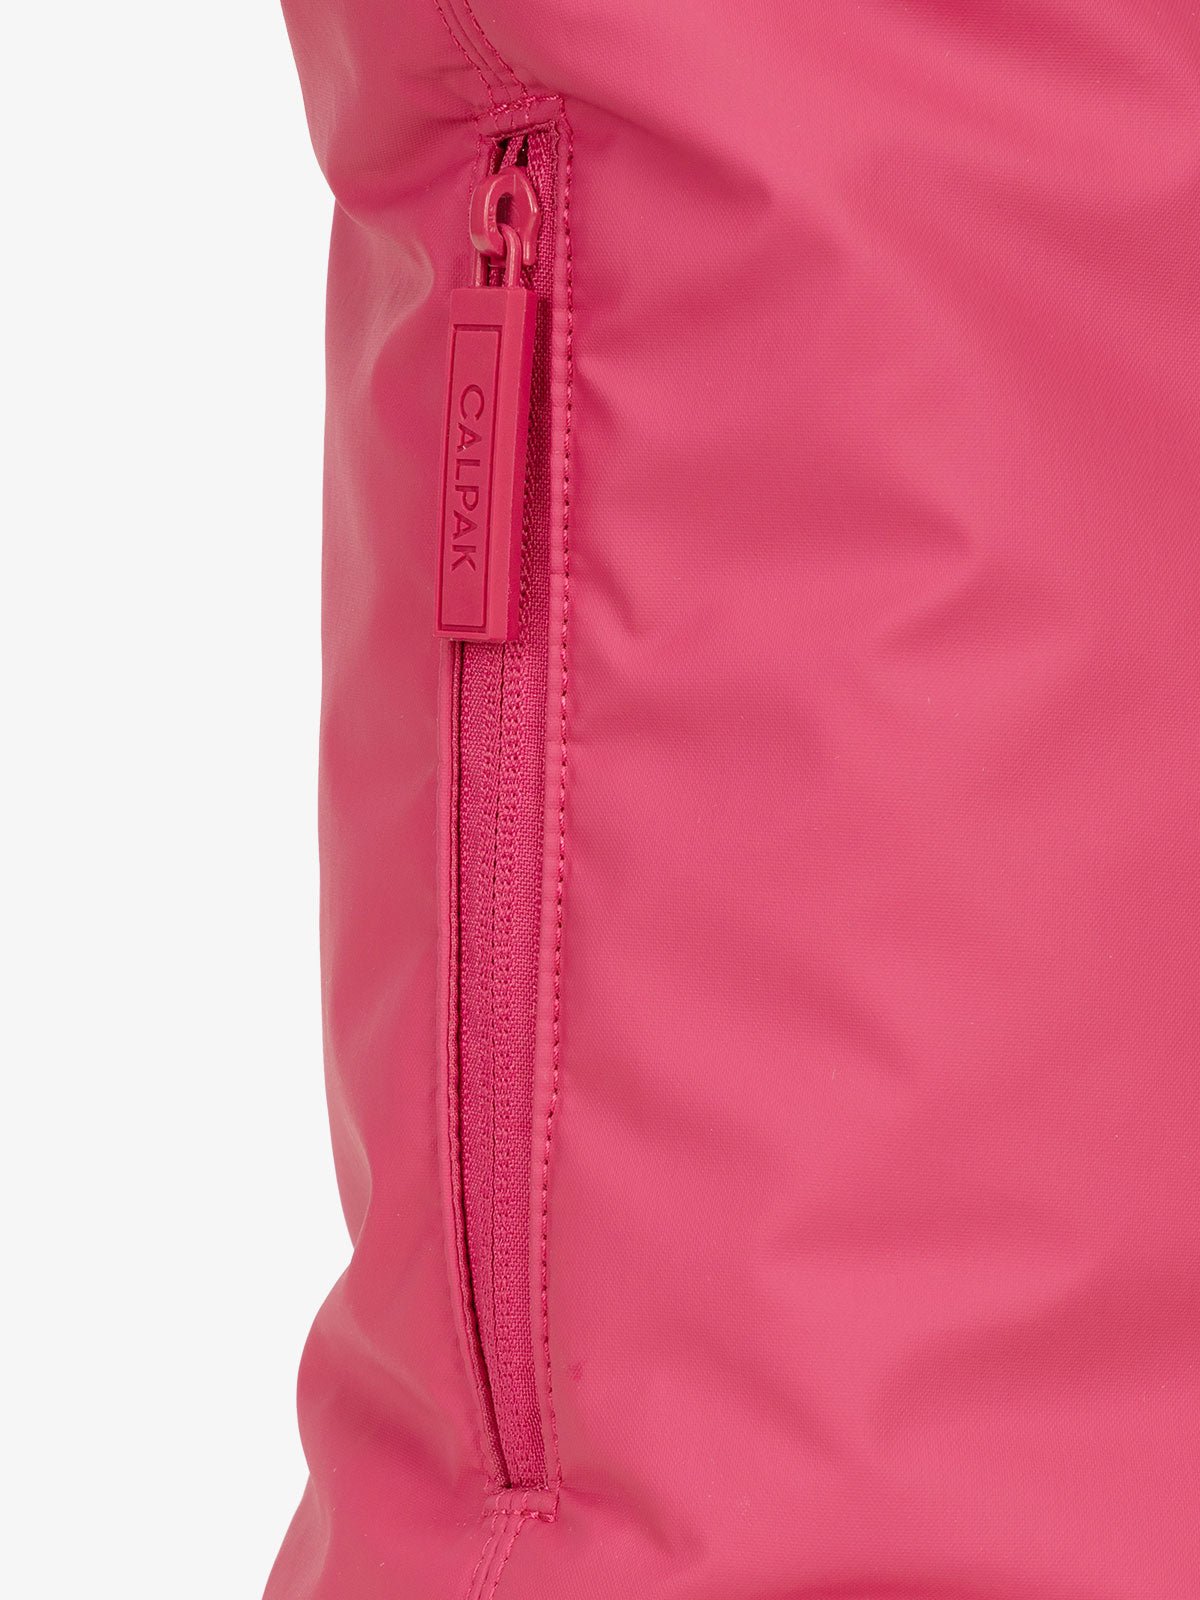 CALPAK Luka expandable laptop bag with hidden zippered pockets in pink